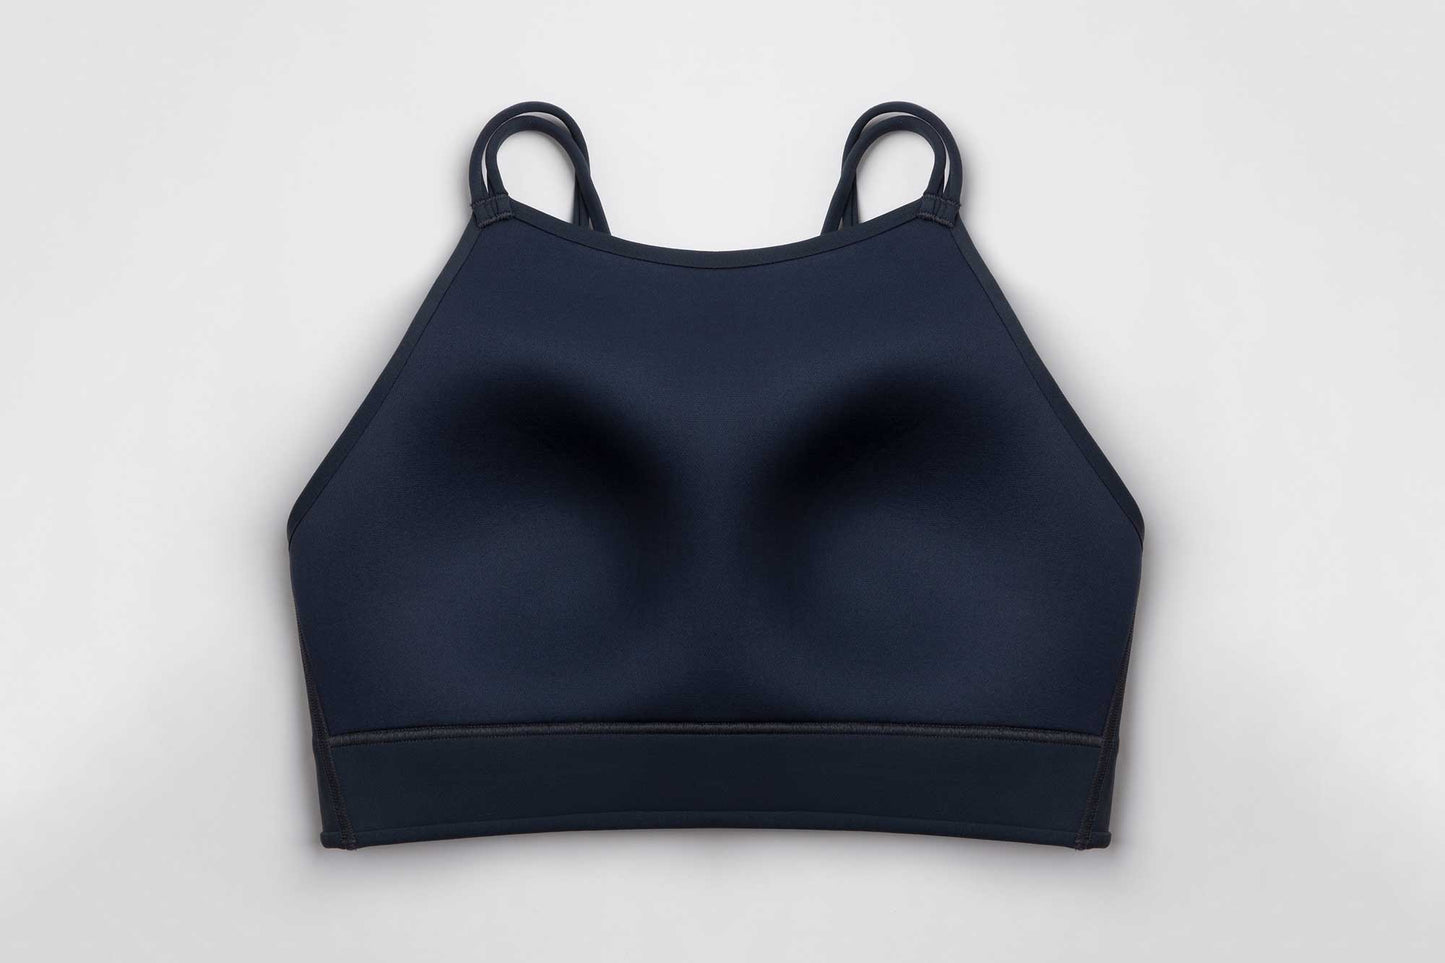 flat lay showing inside the  black sports bra.